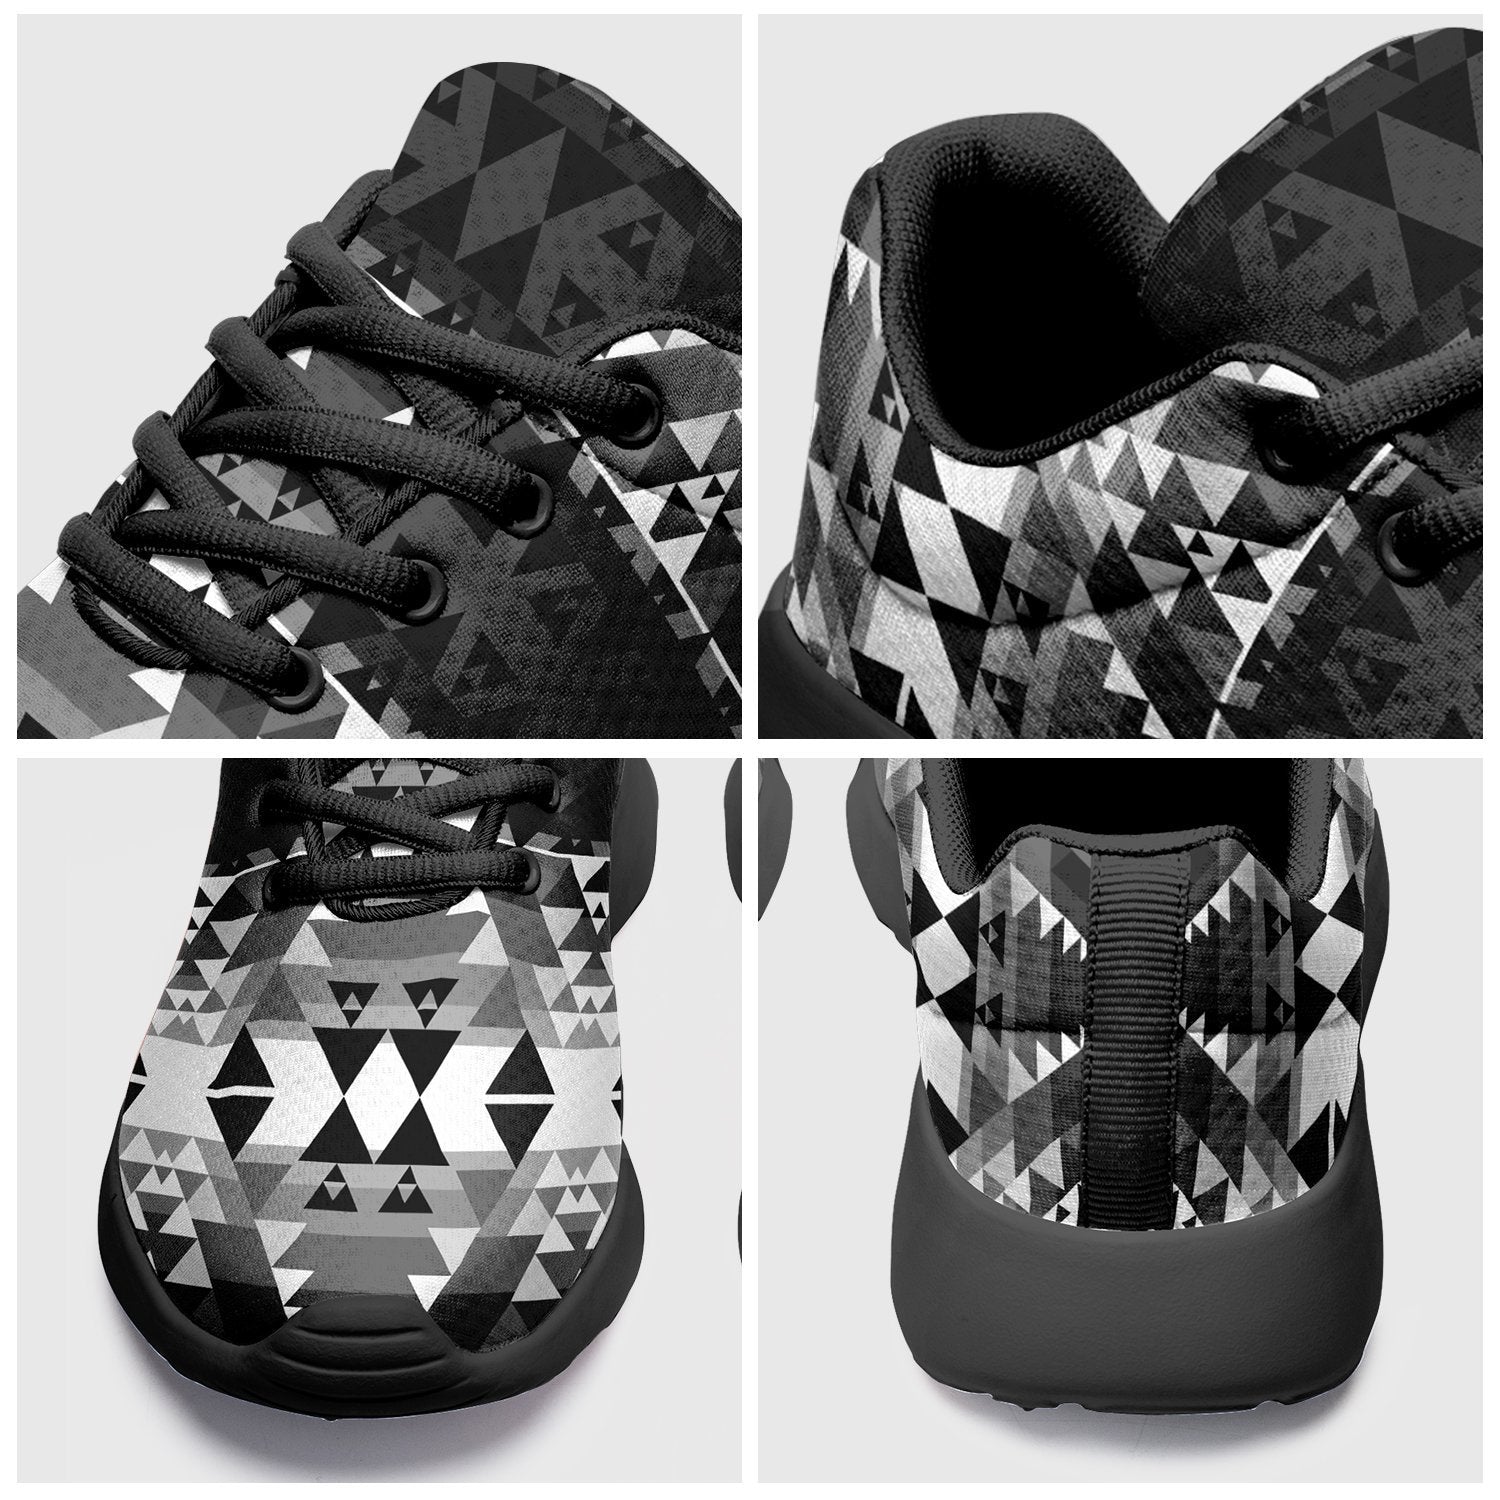 Writing on Stone Black and White Ikkaayi Sport Sneakers 49 Dzine 